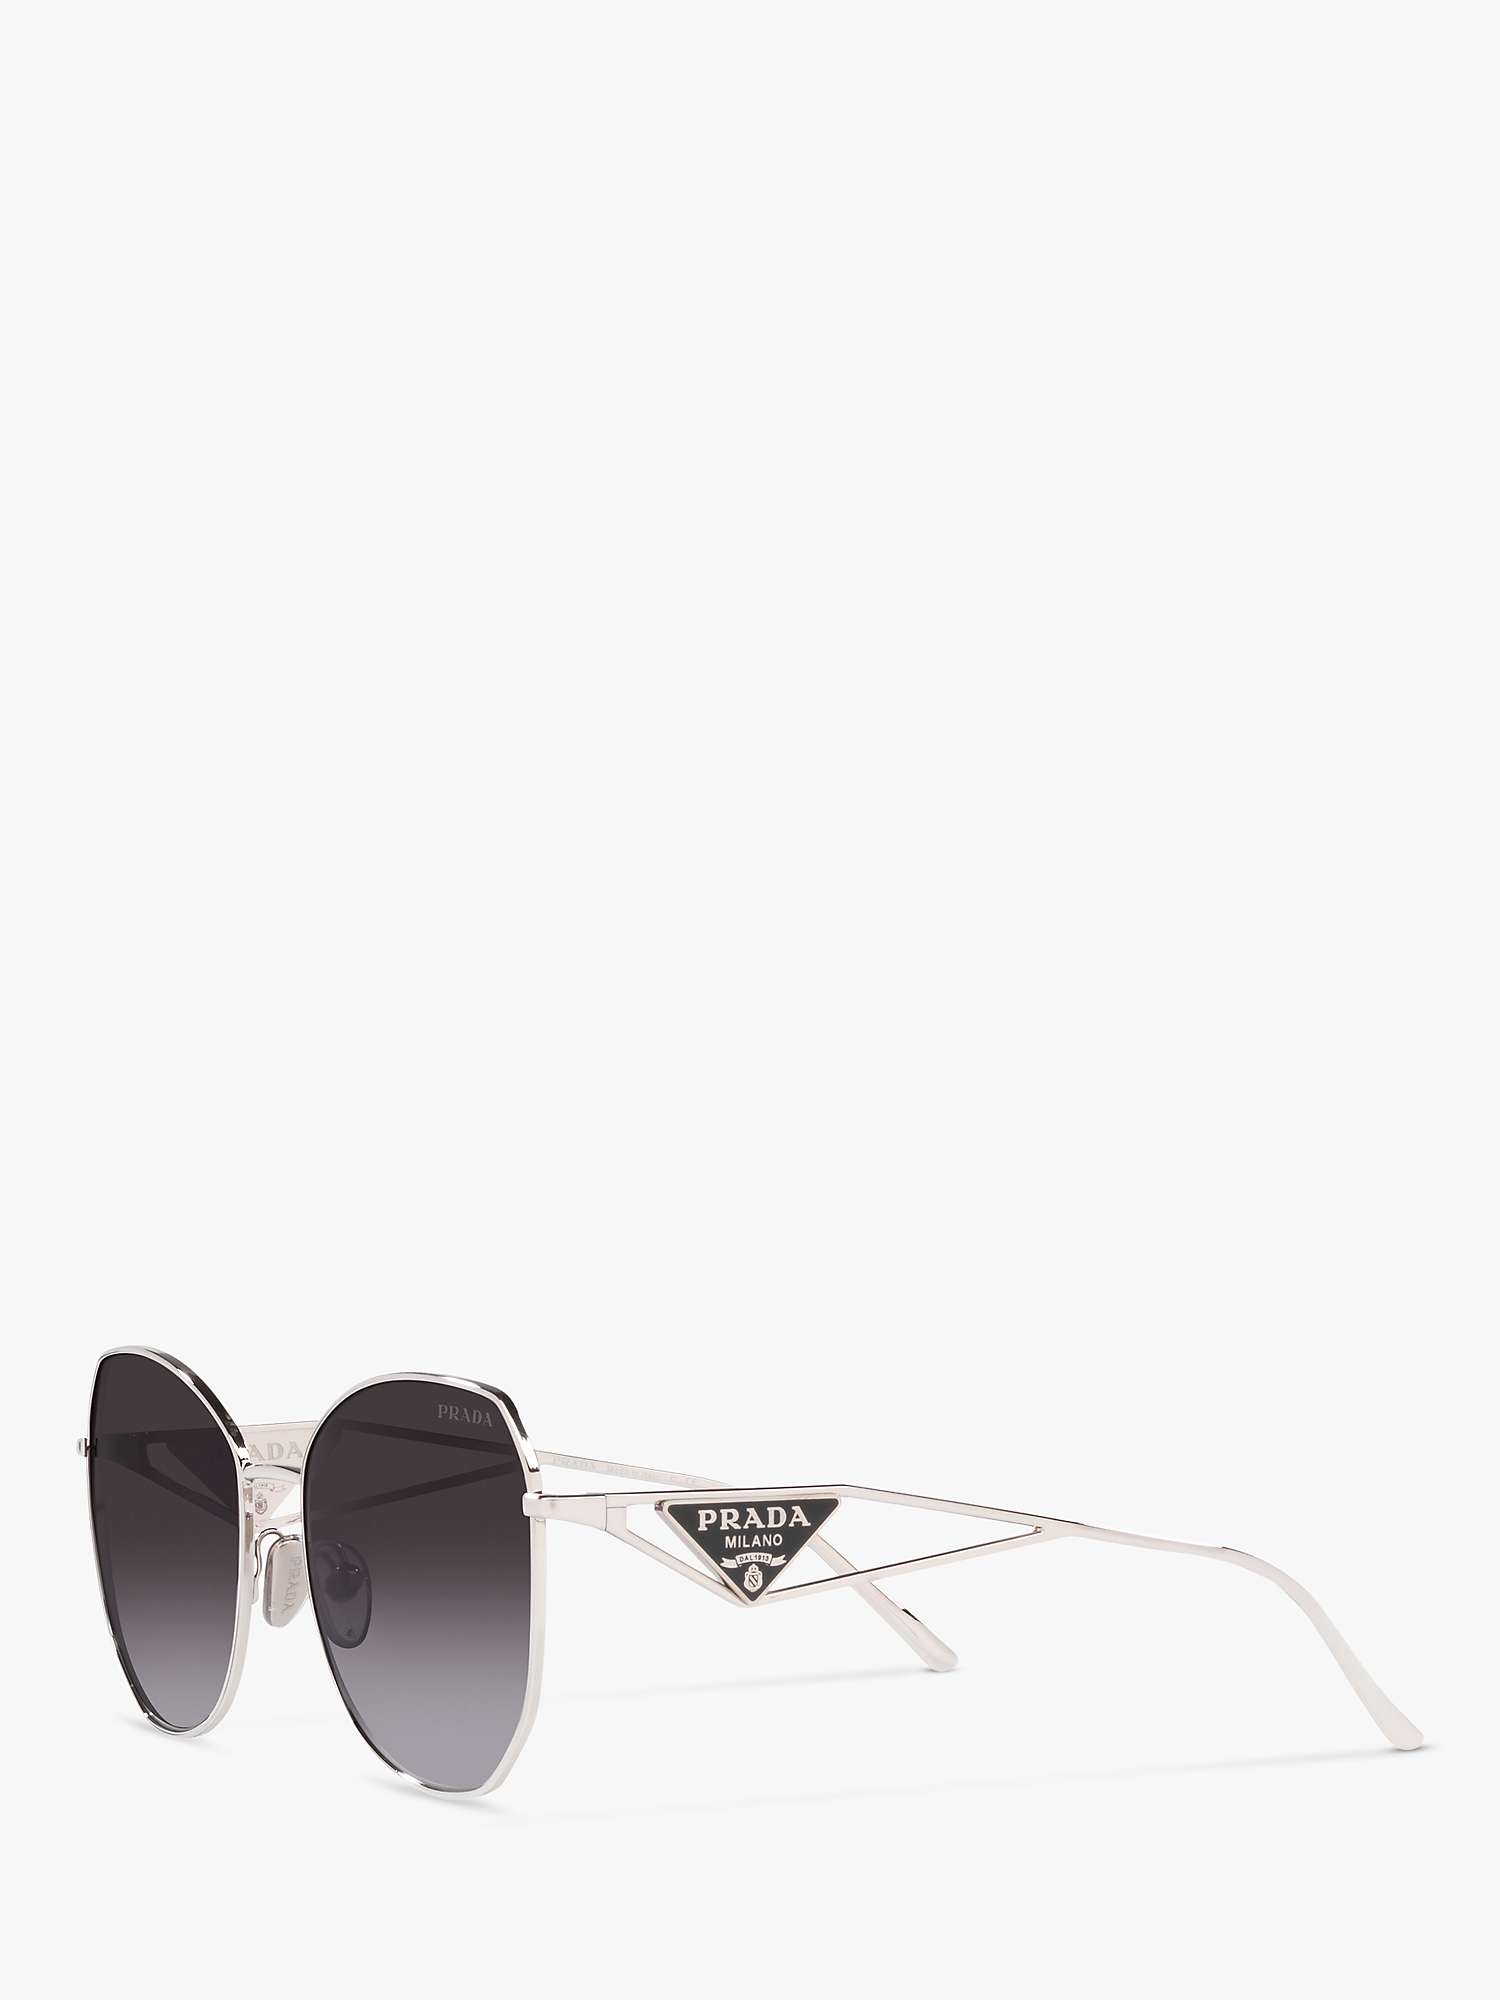 Buy Prada PR 57YS Women's Irregular Sunglasses, Silver/Grey Gradient Online at johnlewis.com